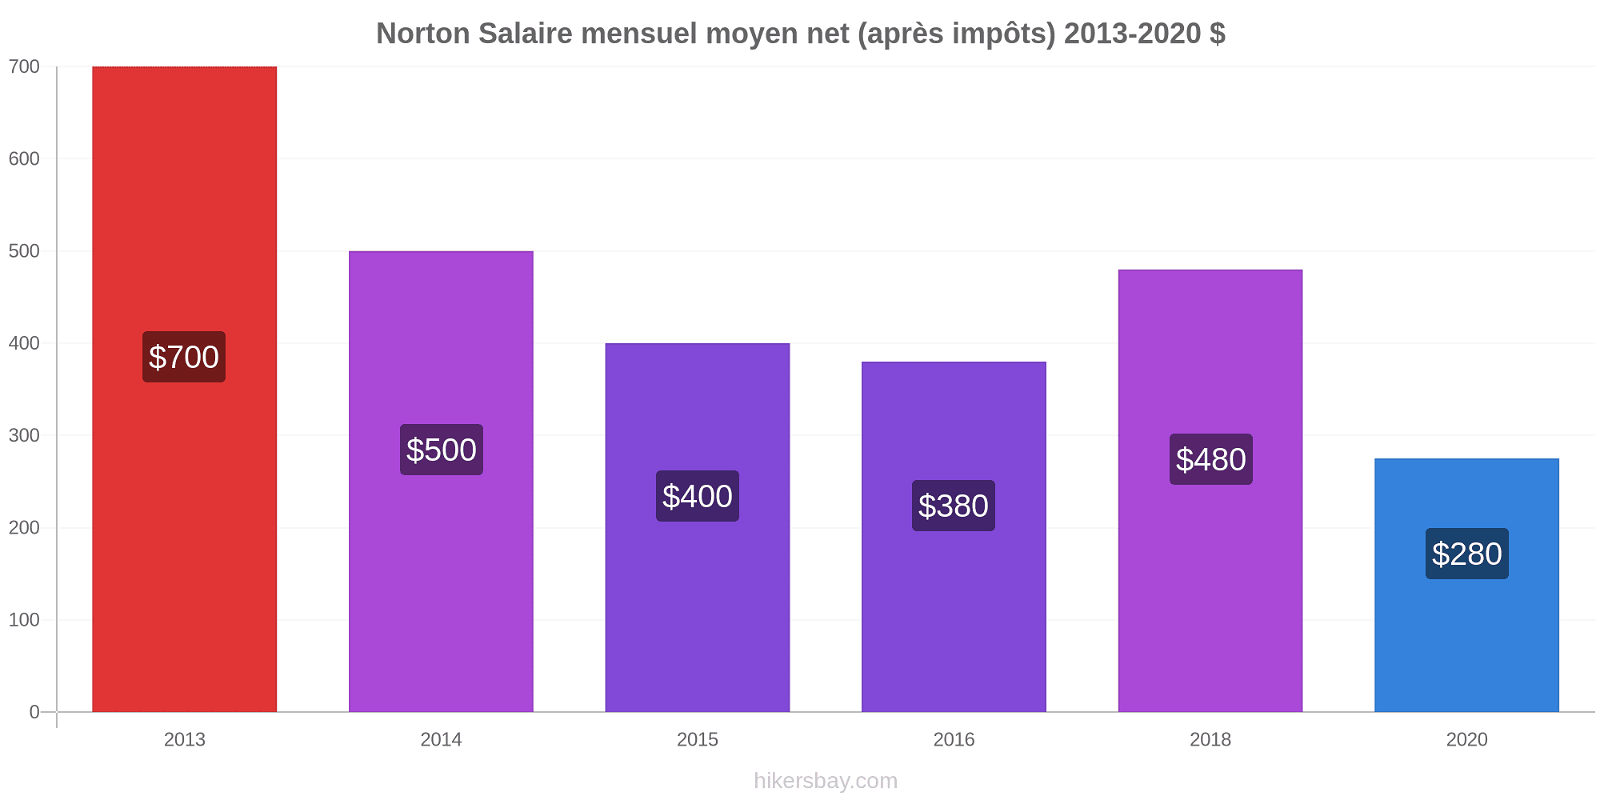 Norton changements de prix Salaire mensuel Net (après impôts) hikersbay.com